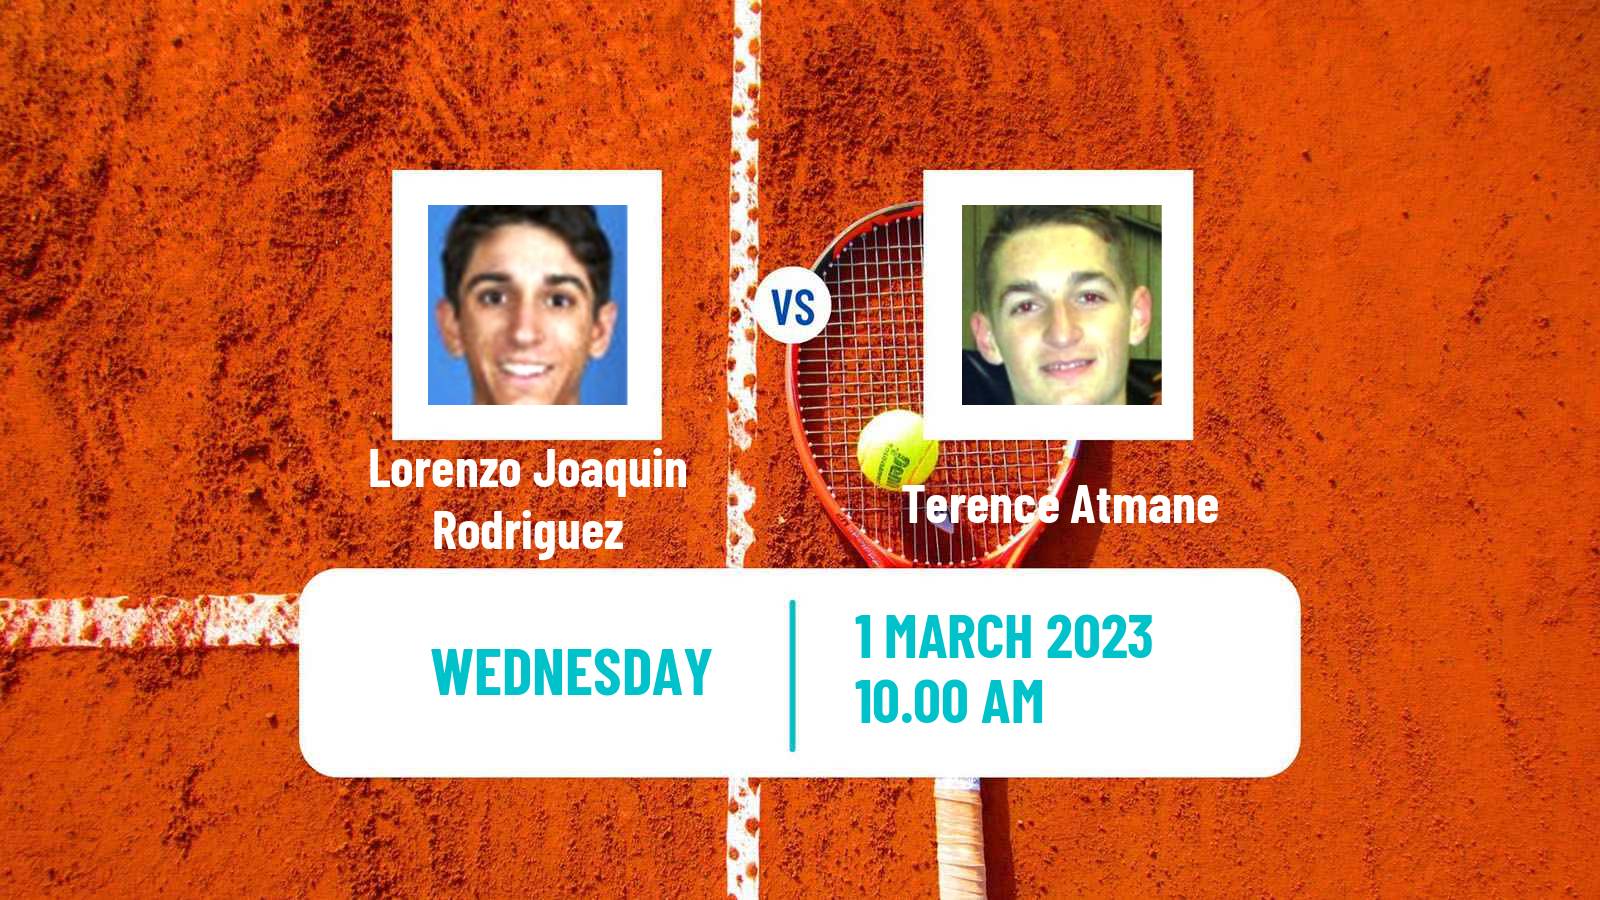 Tennis ITF Tournaments Lorenzo Joaquin Rodriguez - Terence Atmane